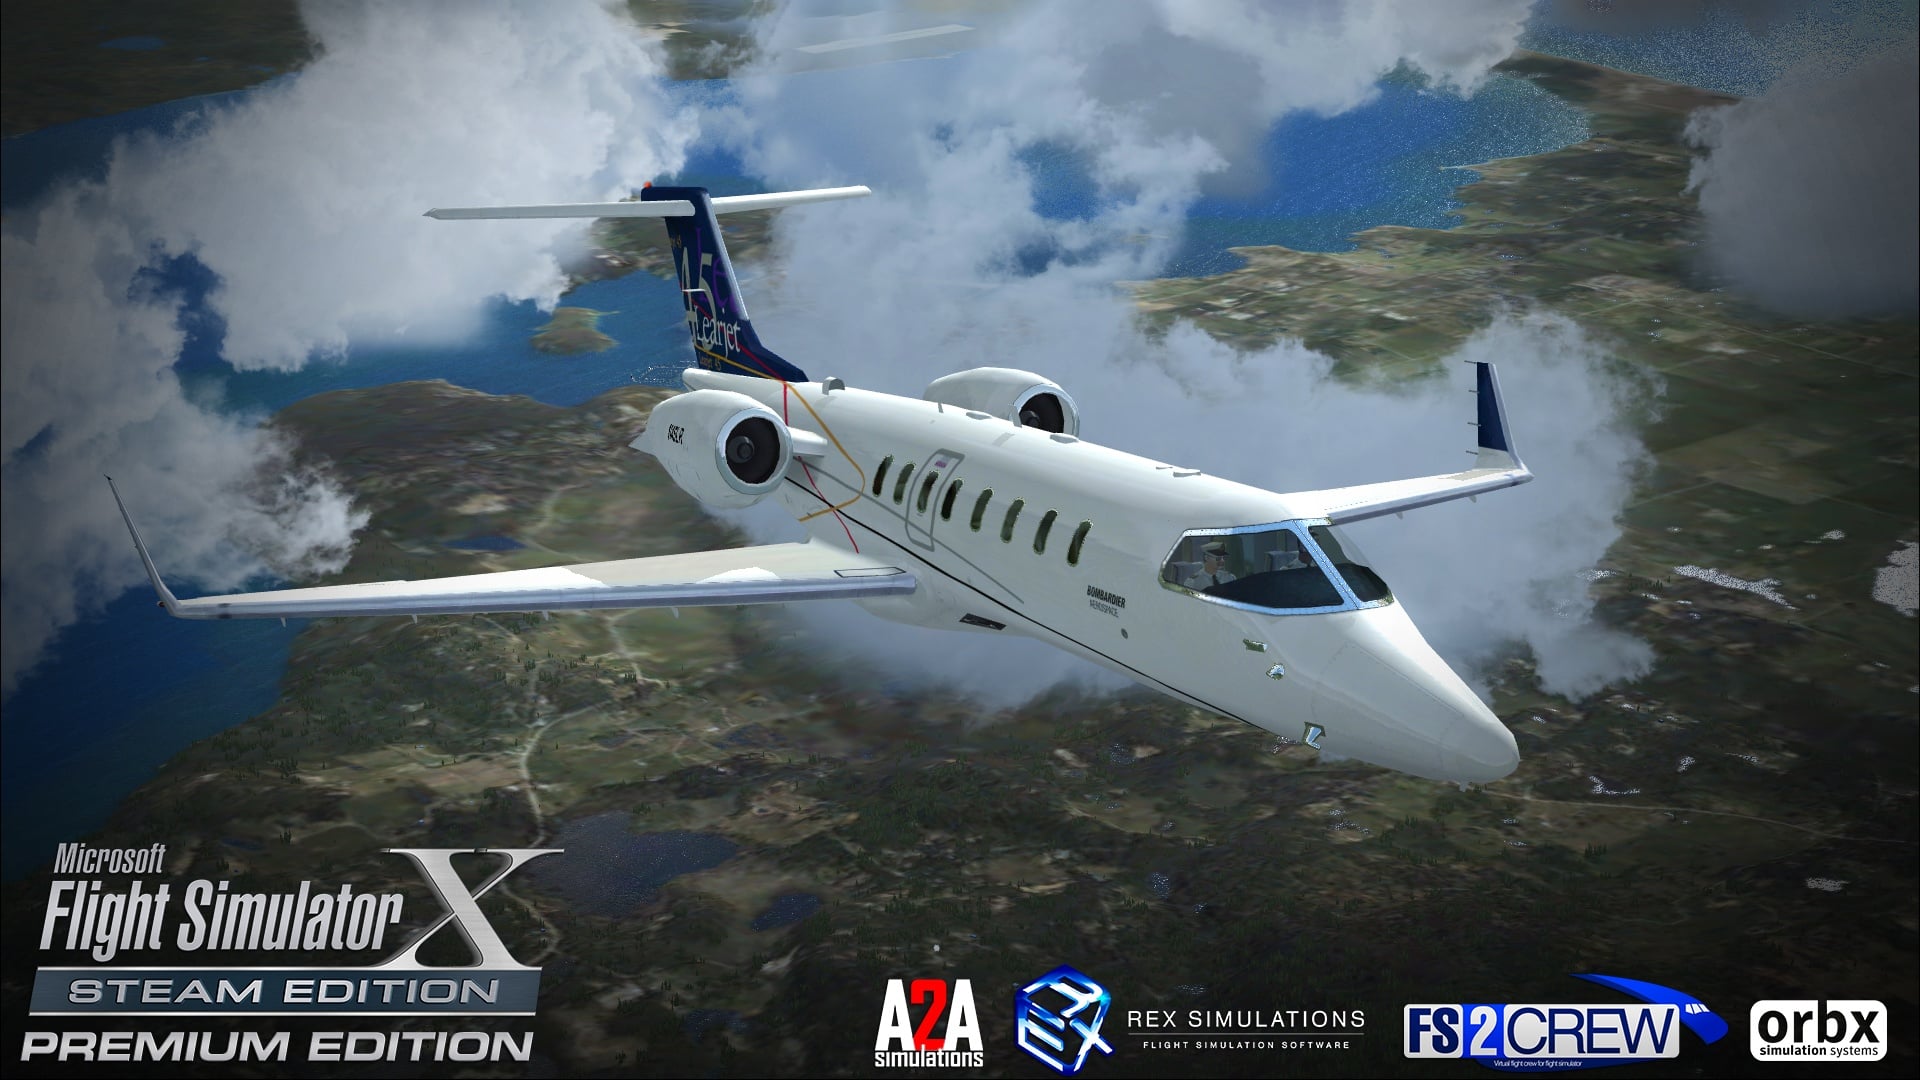 Microsoft Flight Simulator X Steam Edition PC Version Full Game Free Downloadd